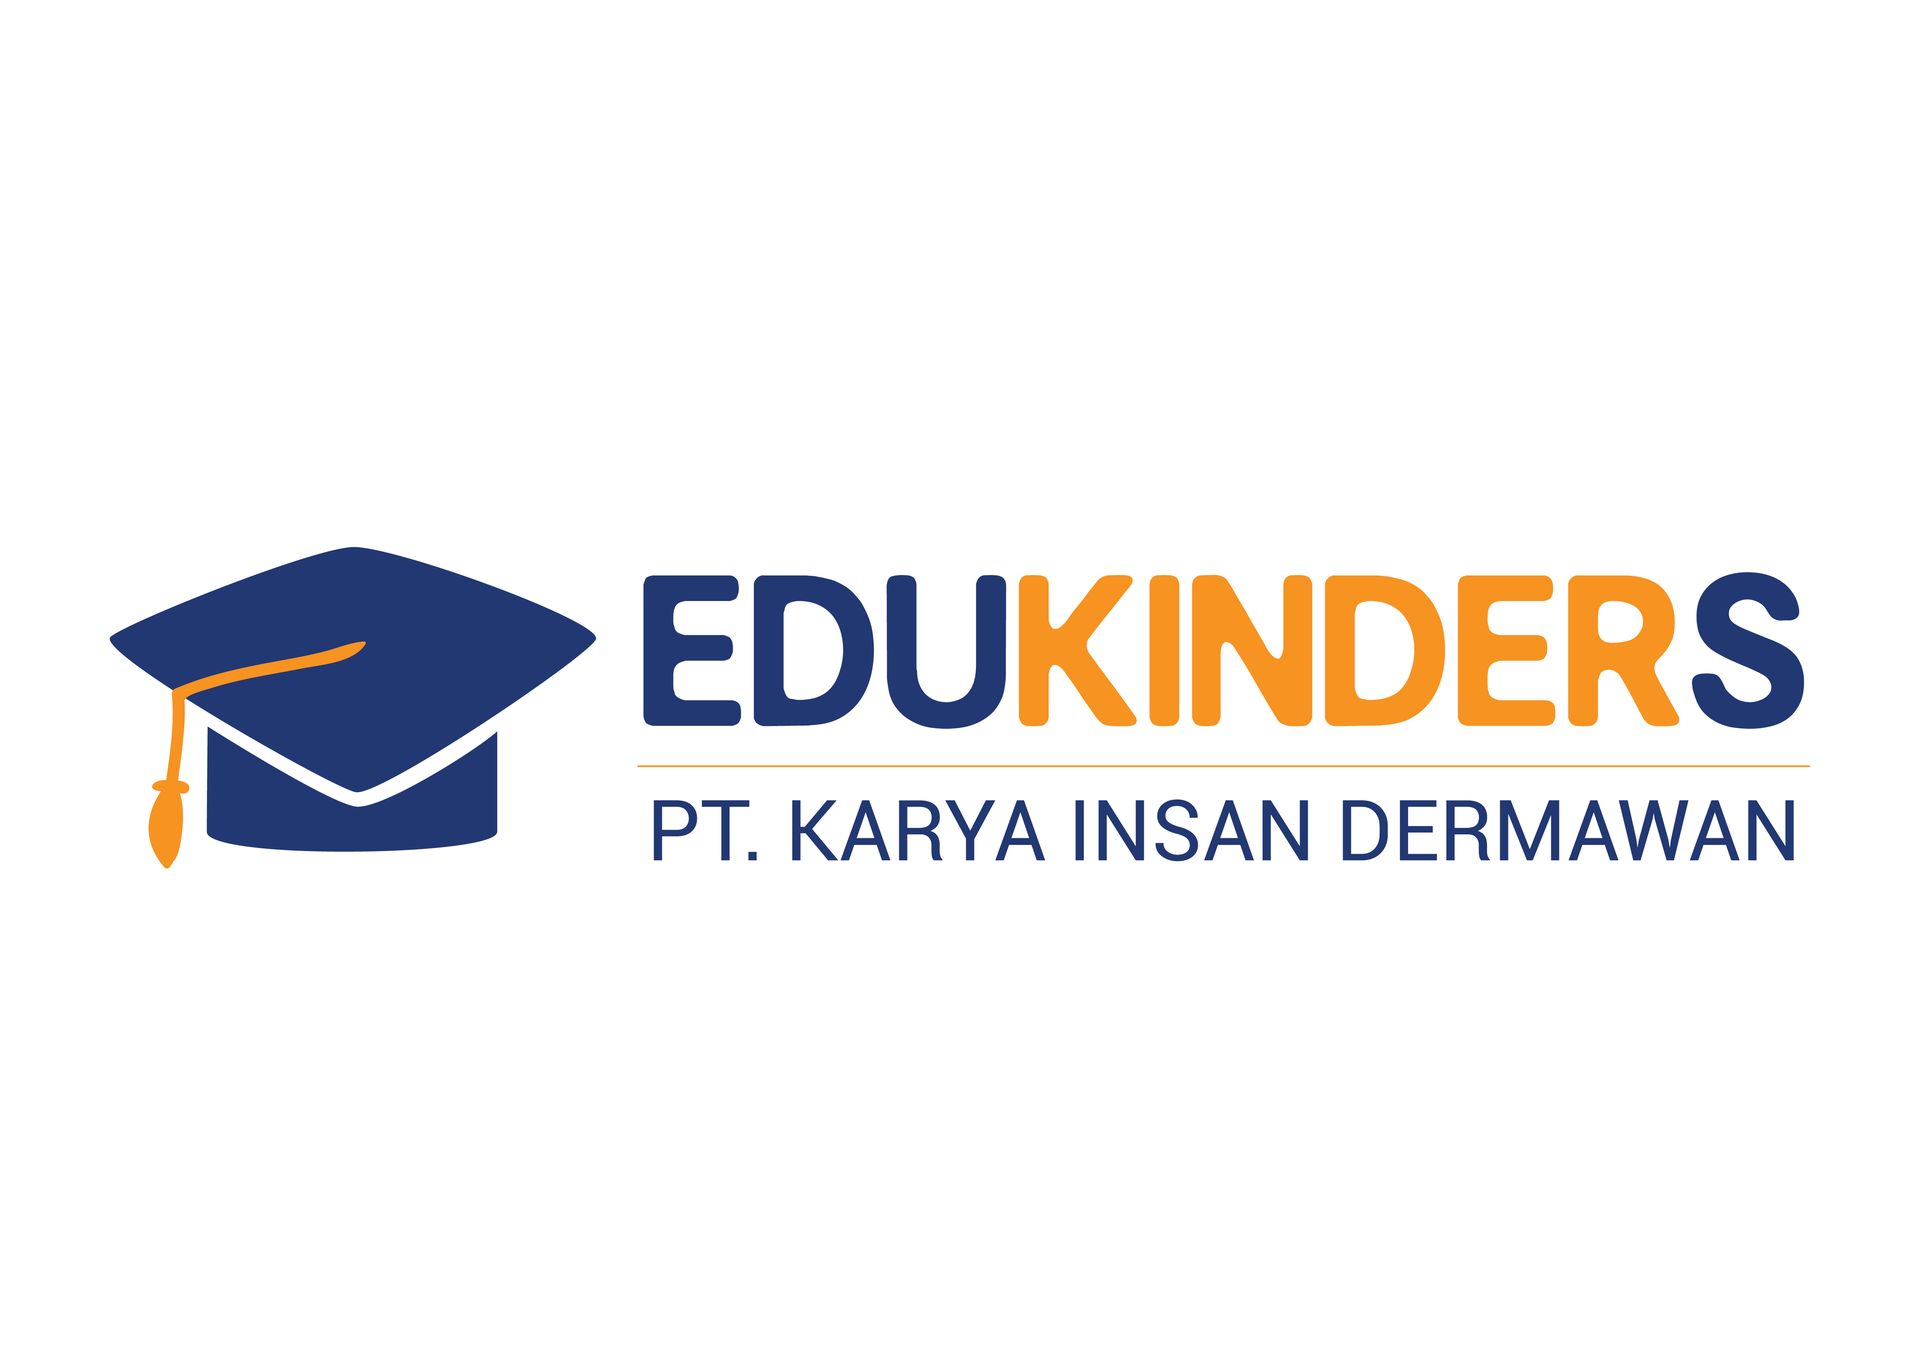 Pt Karya Insan Dermawan is hiring a Kindergarten ...